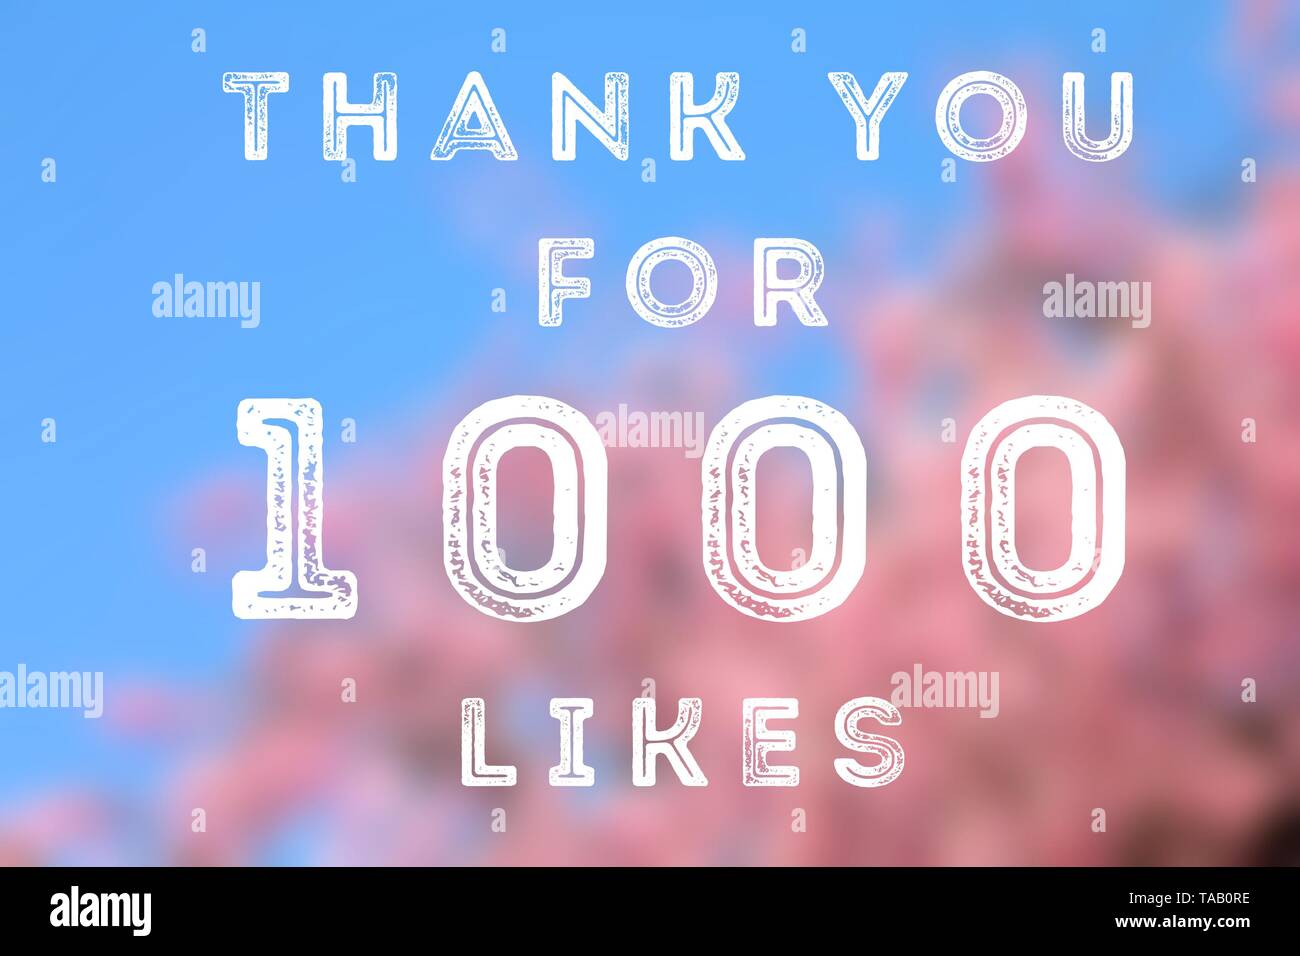 1000 likes - social media achievement. Company online community thank you note. 1k follows. Stock Photo